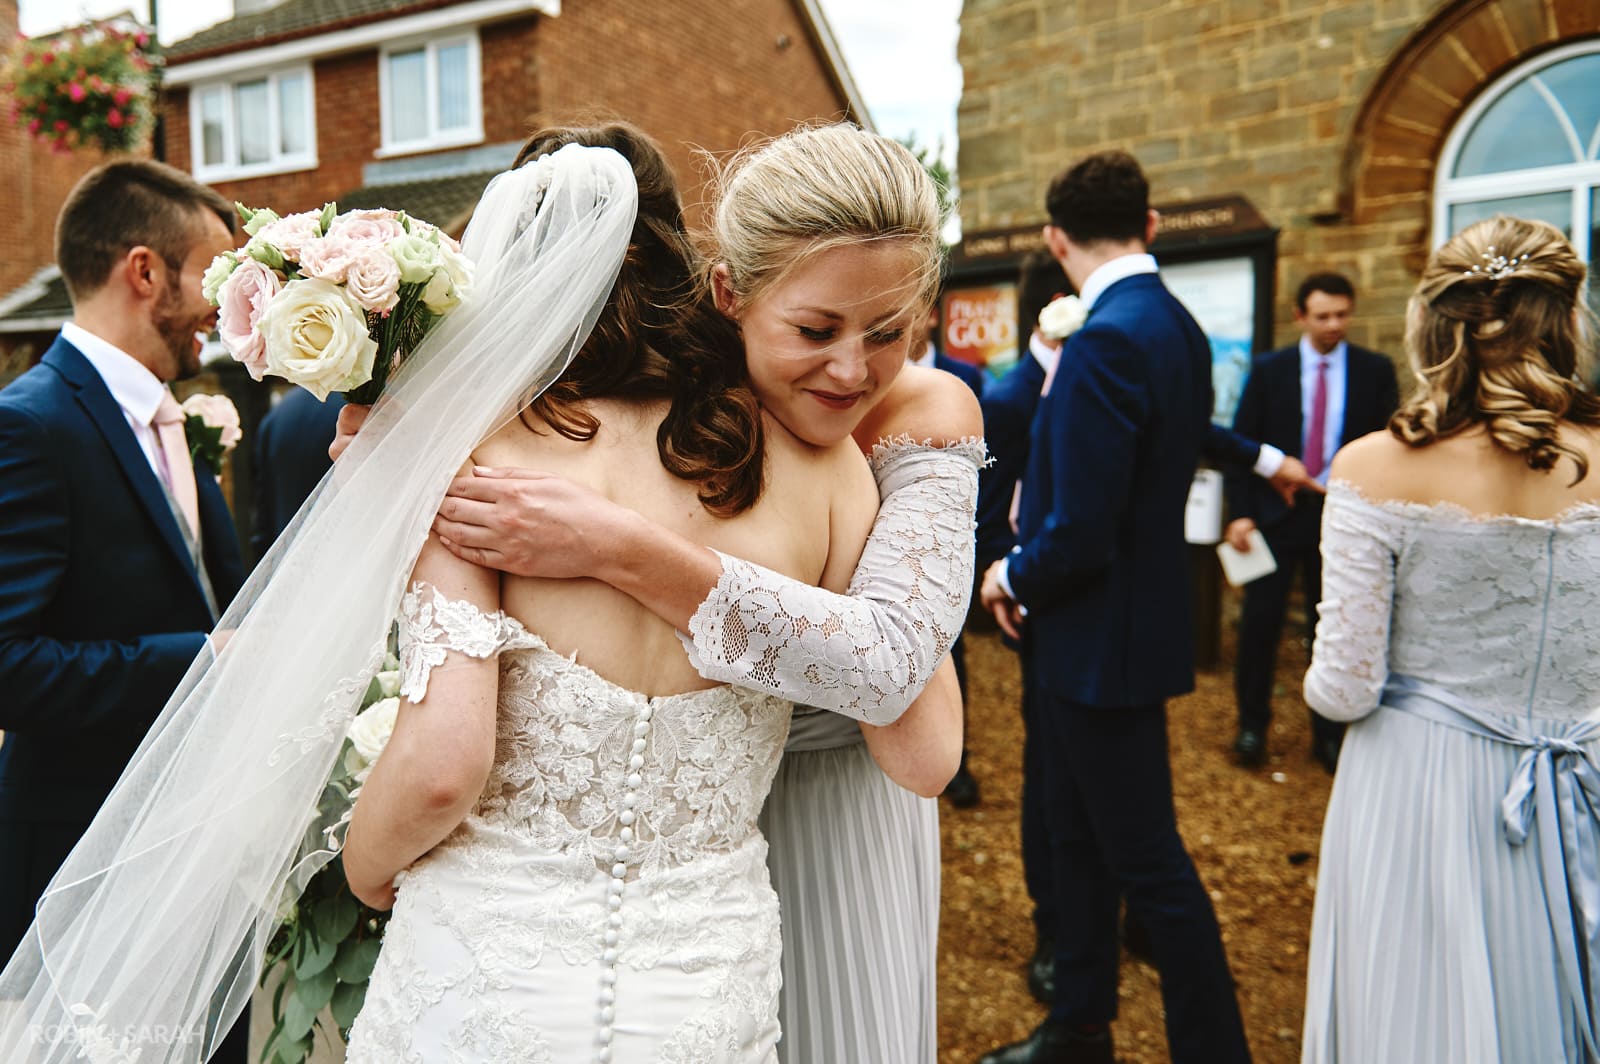 Bride hugs friend after church wedding ceremony